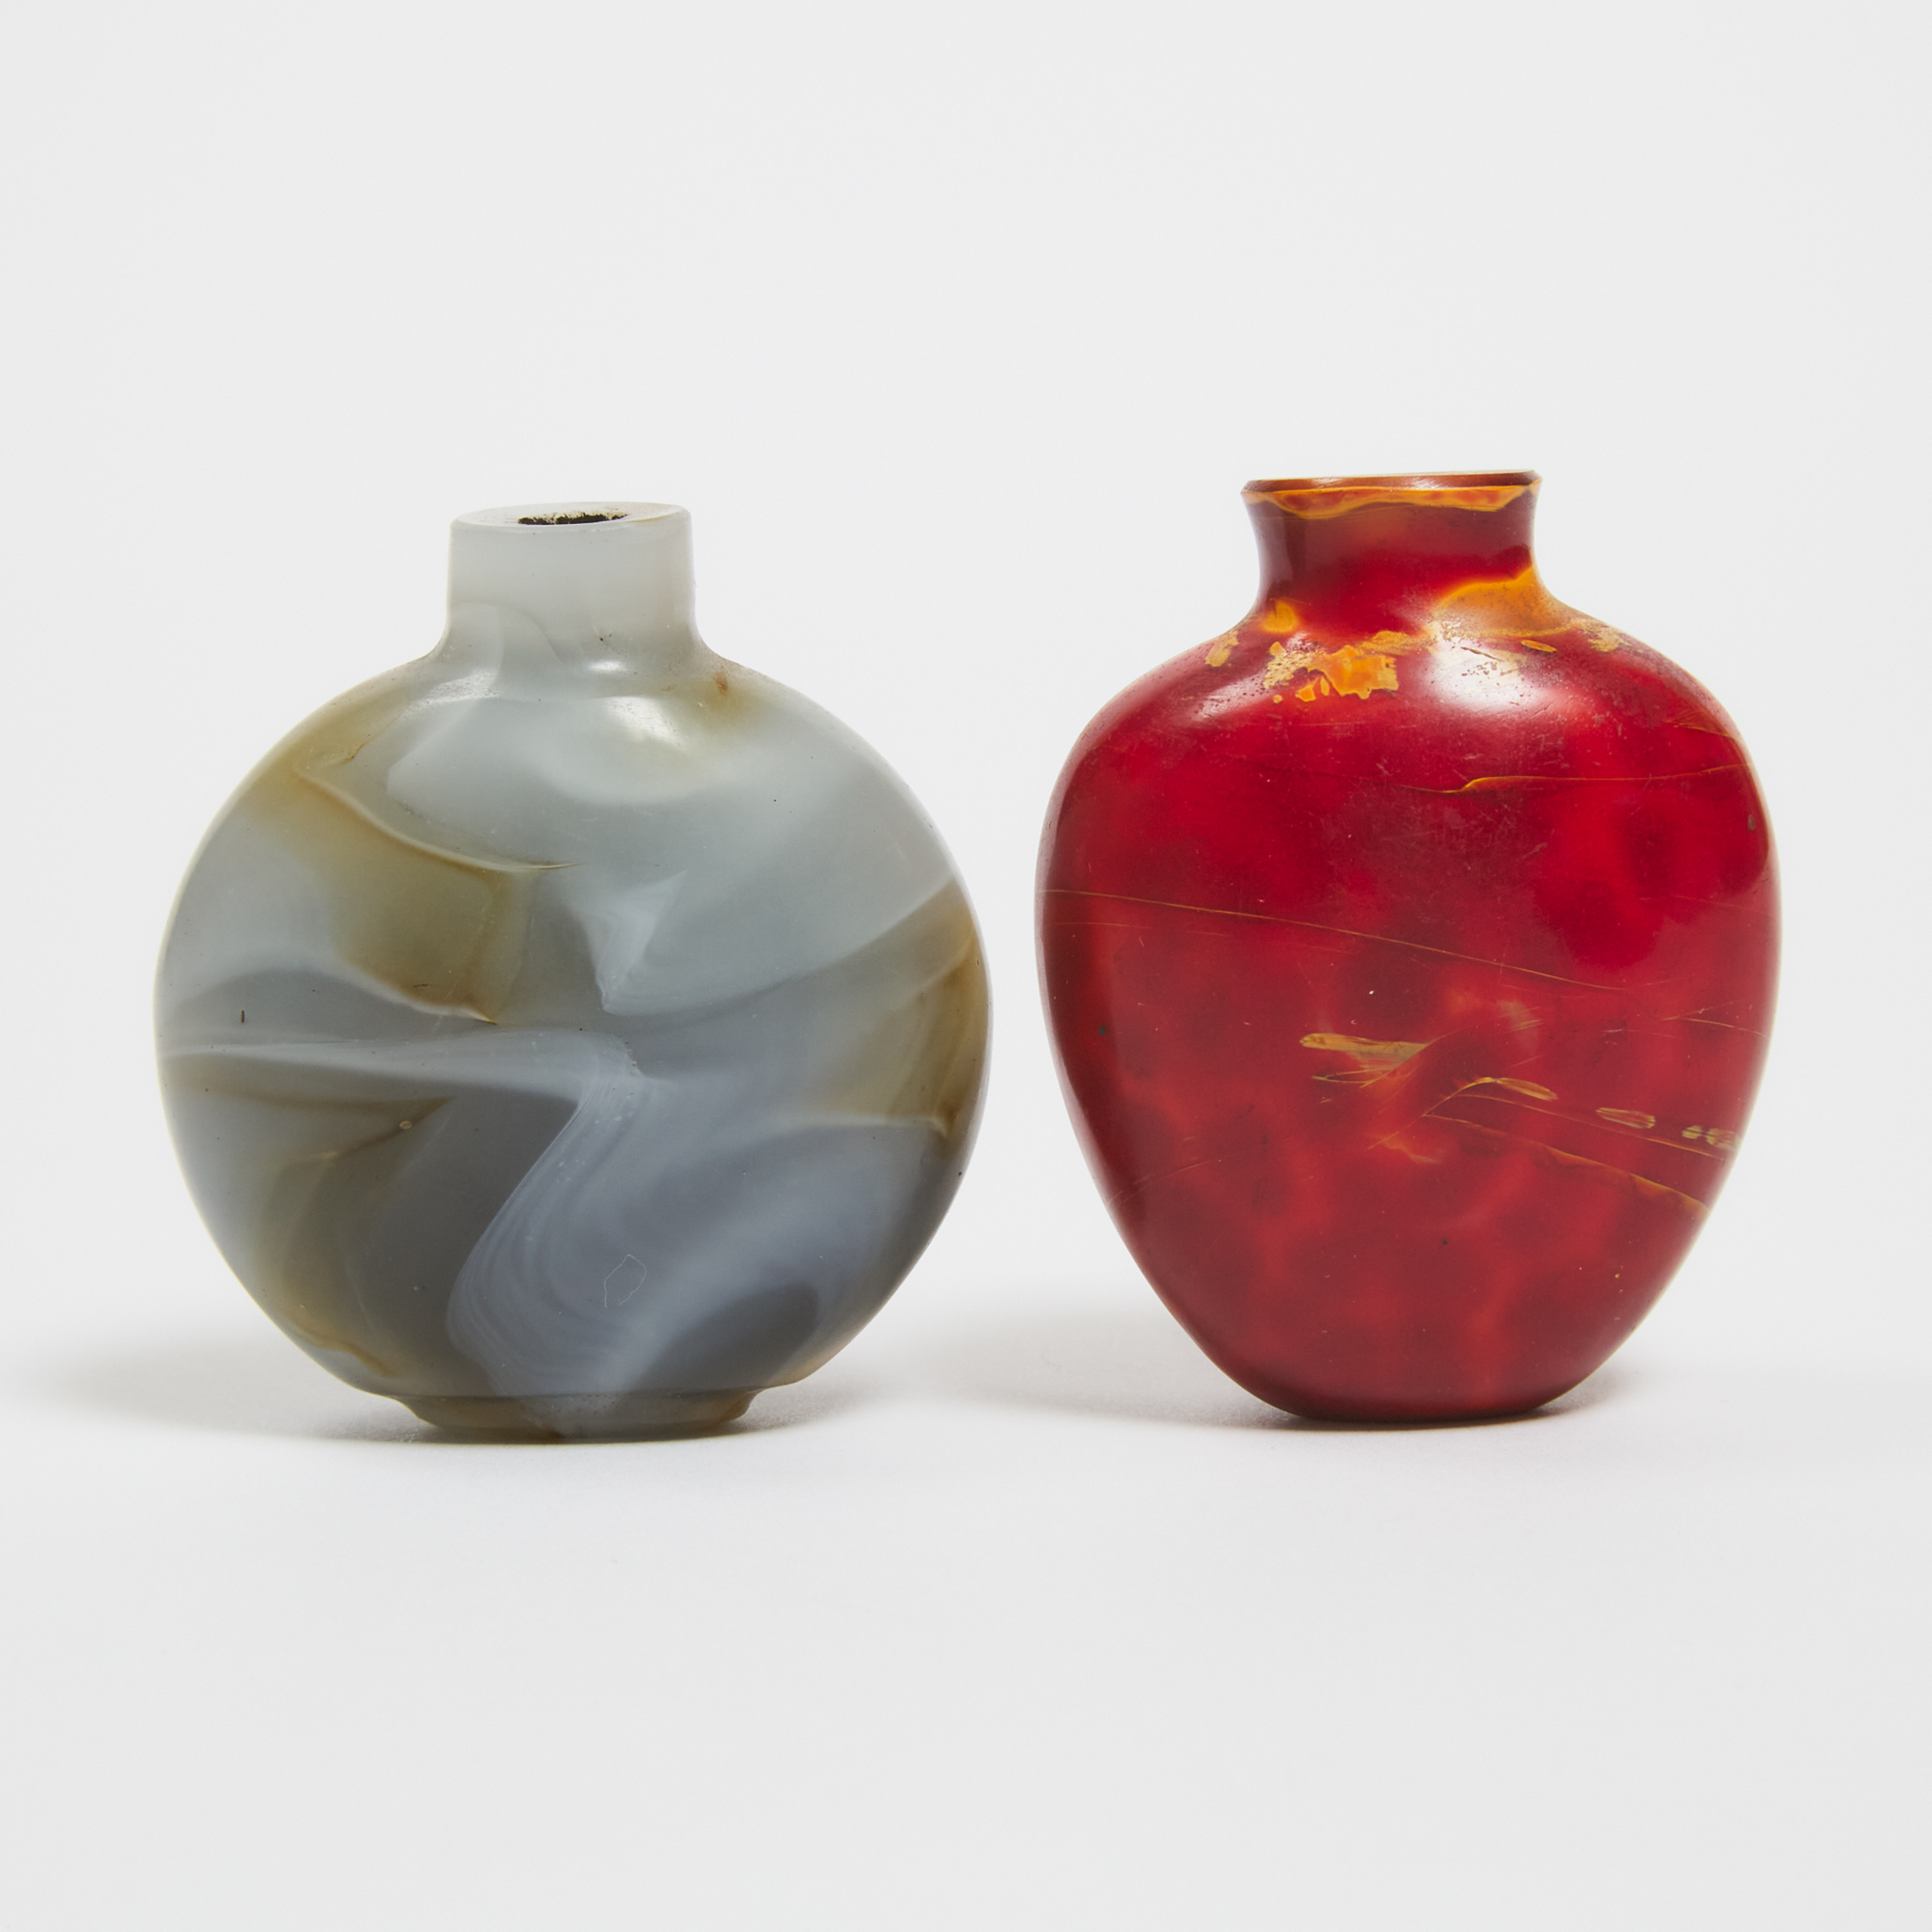 An Imitation-Realgar Glass Snuff Bottle, Together With an Imitation-Agate Glass Snuff Bottle, 19th Century